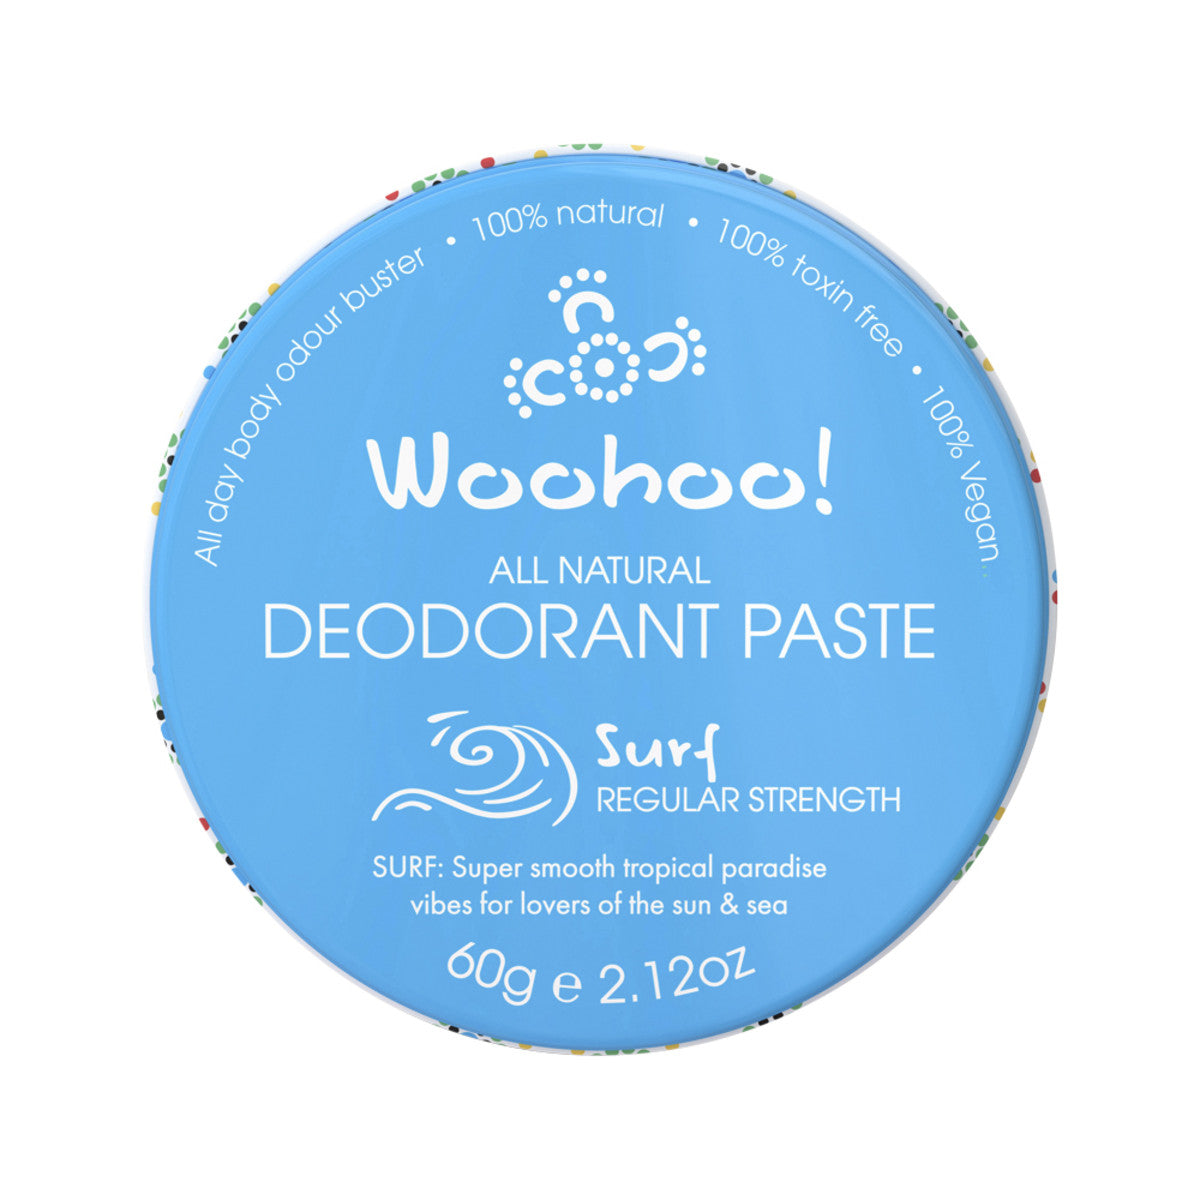 Woohoo Deodorant Paste Surf (Regular Strength) Tin 60g